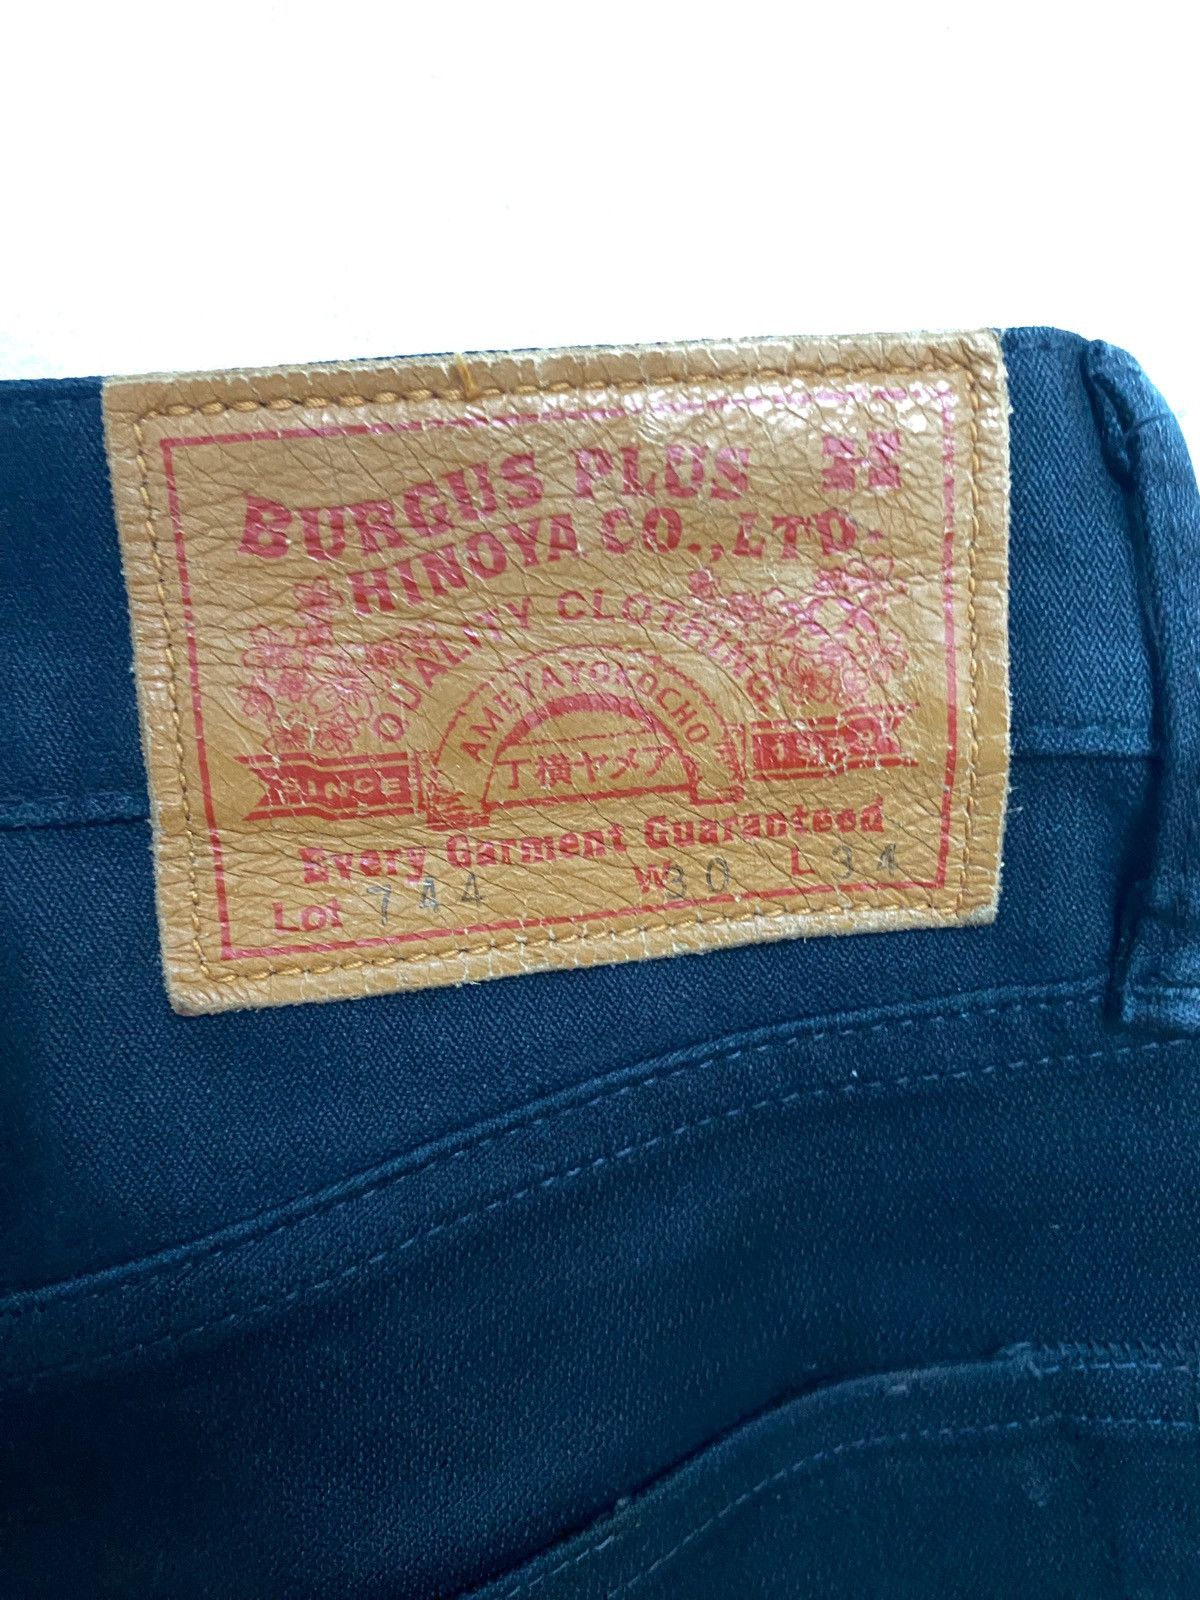 Burgus Plus Hinoya Original Black Skinny Jeans - 8